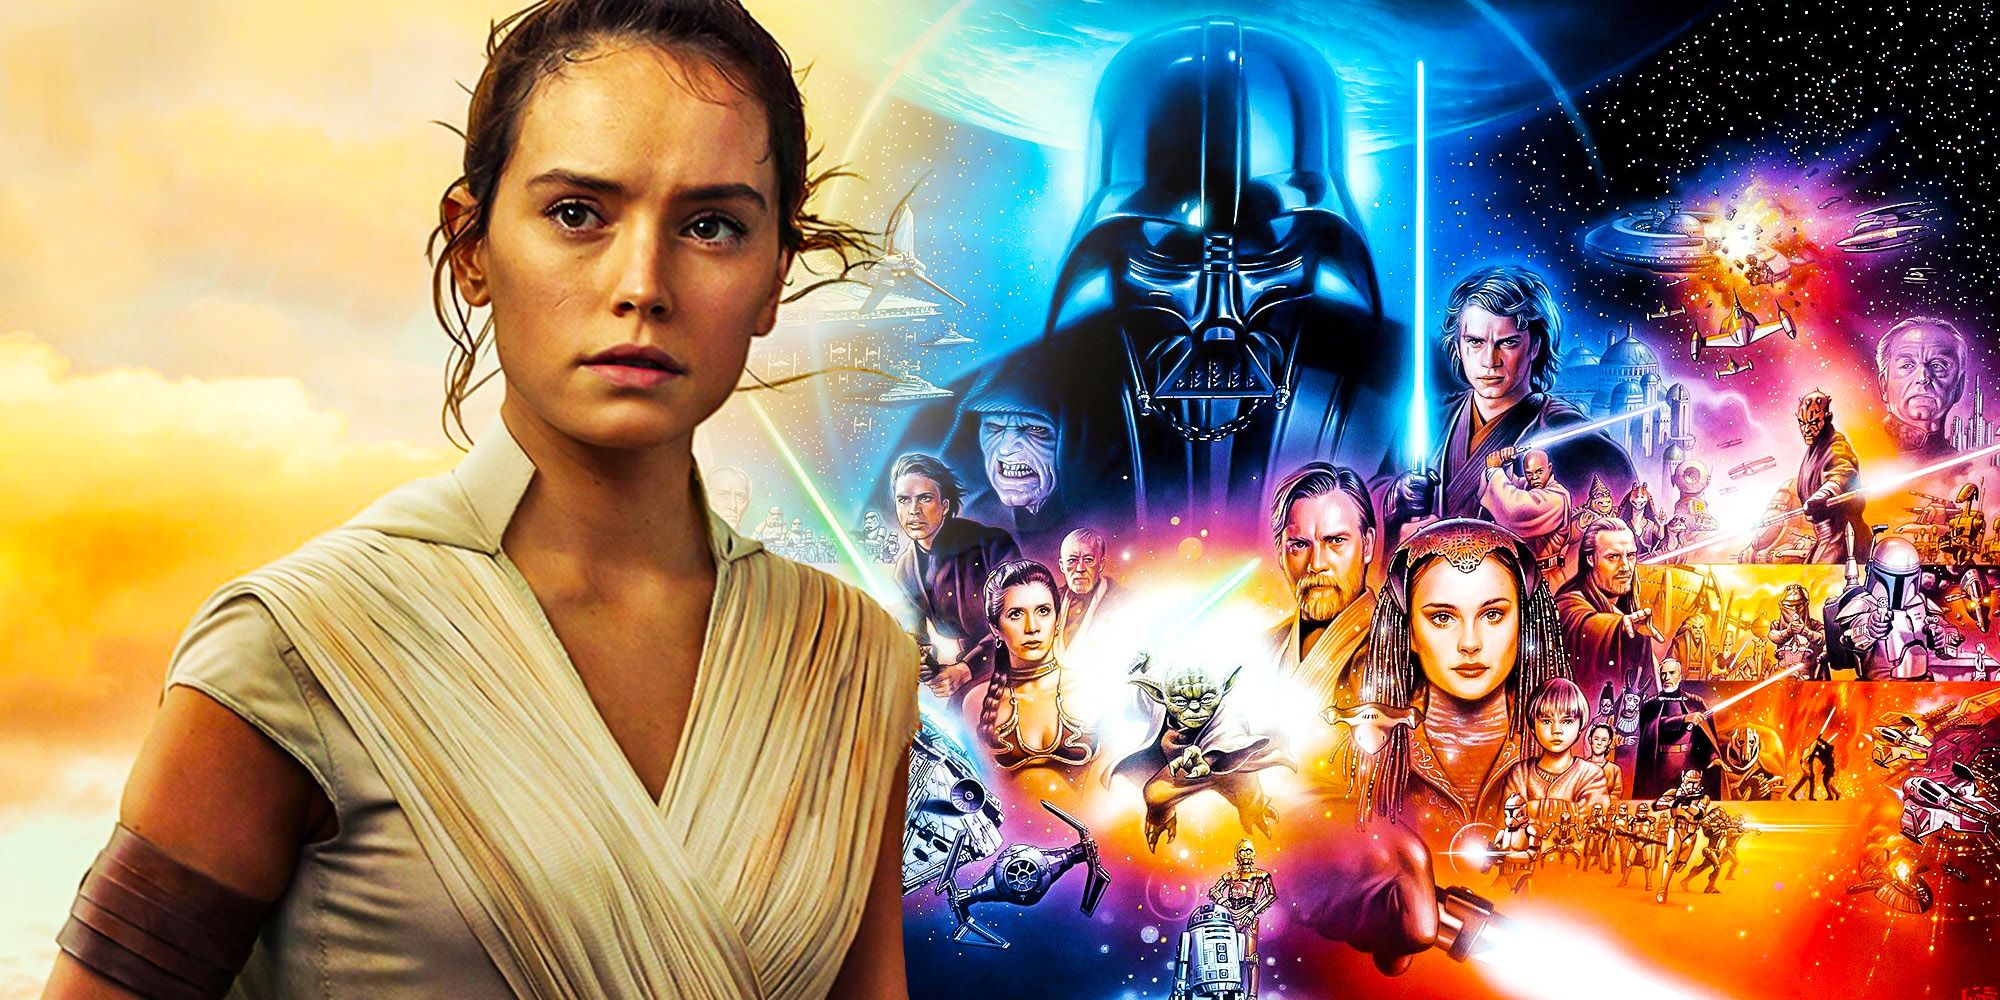 Star Wars 10 Theory: The Next Trilogy Follows Grogu's Jedi Order, Not Rey's